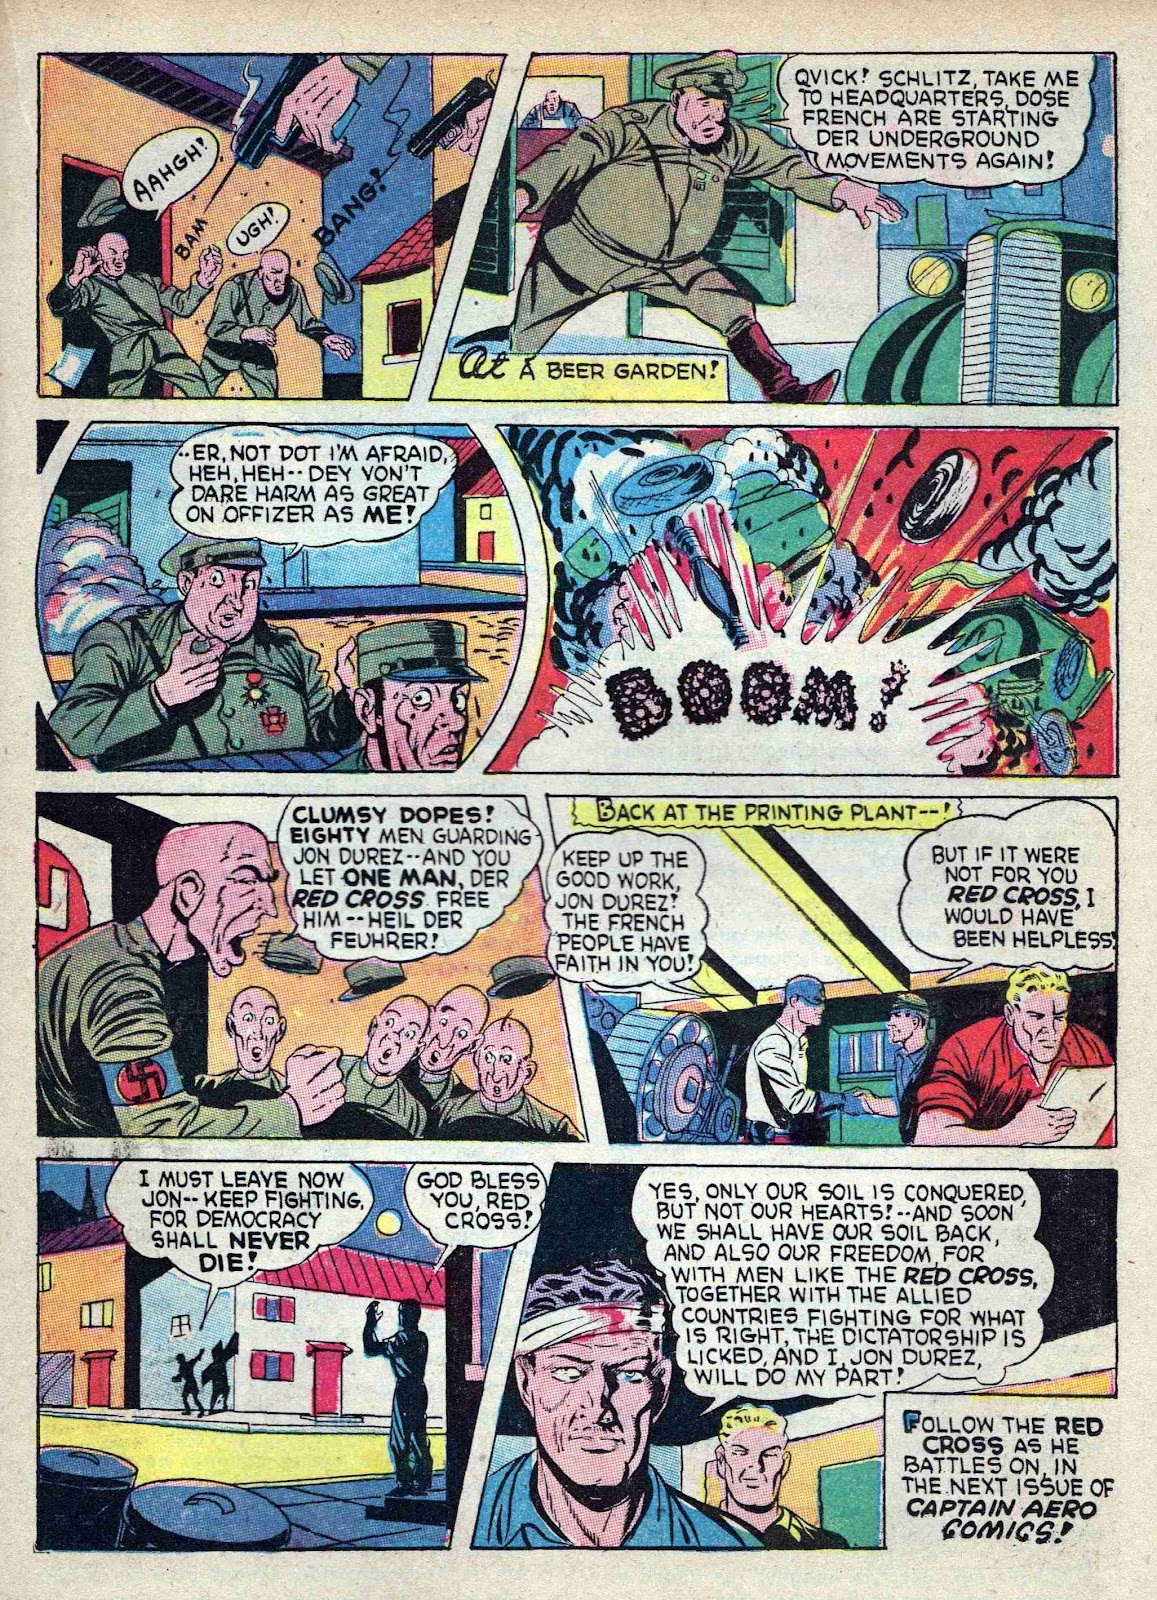 Captain Aero Comics issue 9 - Page 33